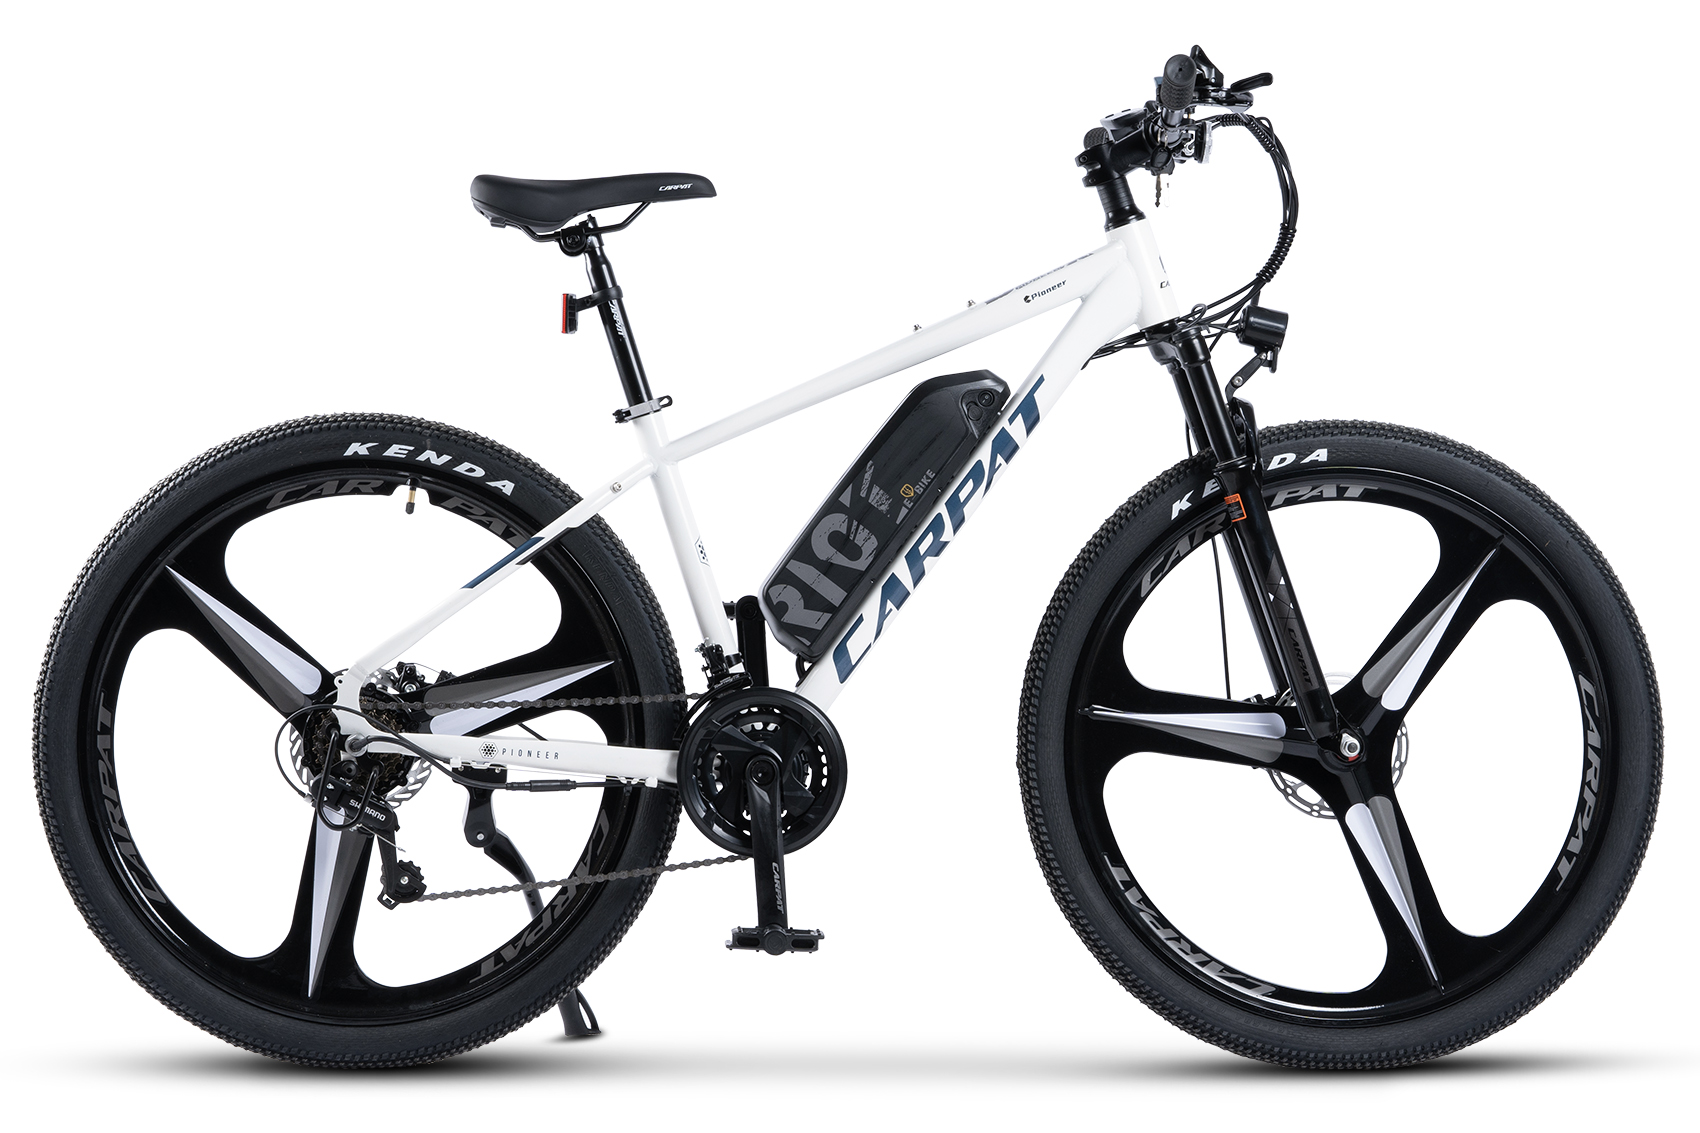 PROMO BICICLETE - Bicicleta Electrica MTB (E-Bike) Carpat Pioneer C27517E 27.5", Alb/Albastru, carpatsport.ro